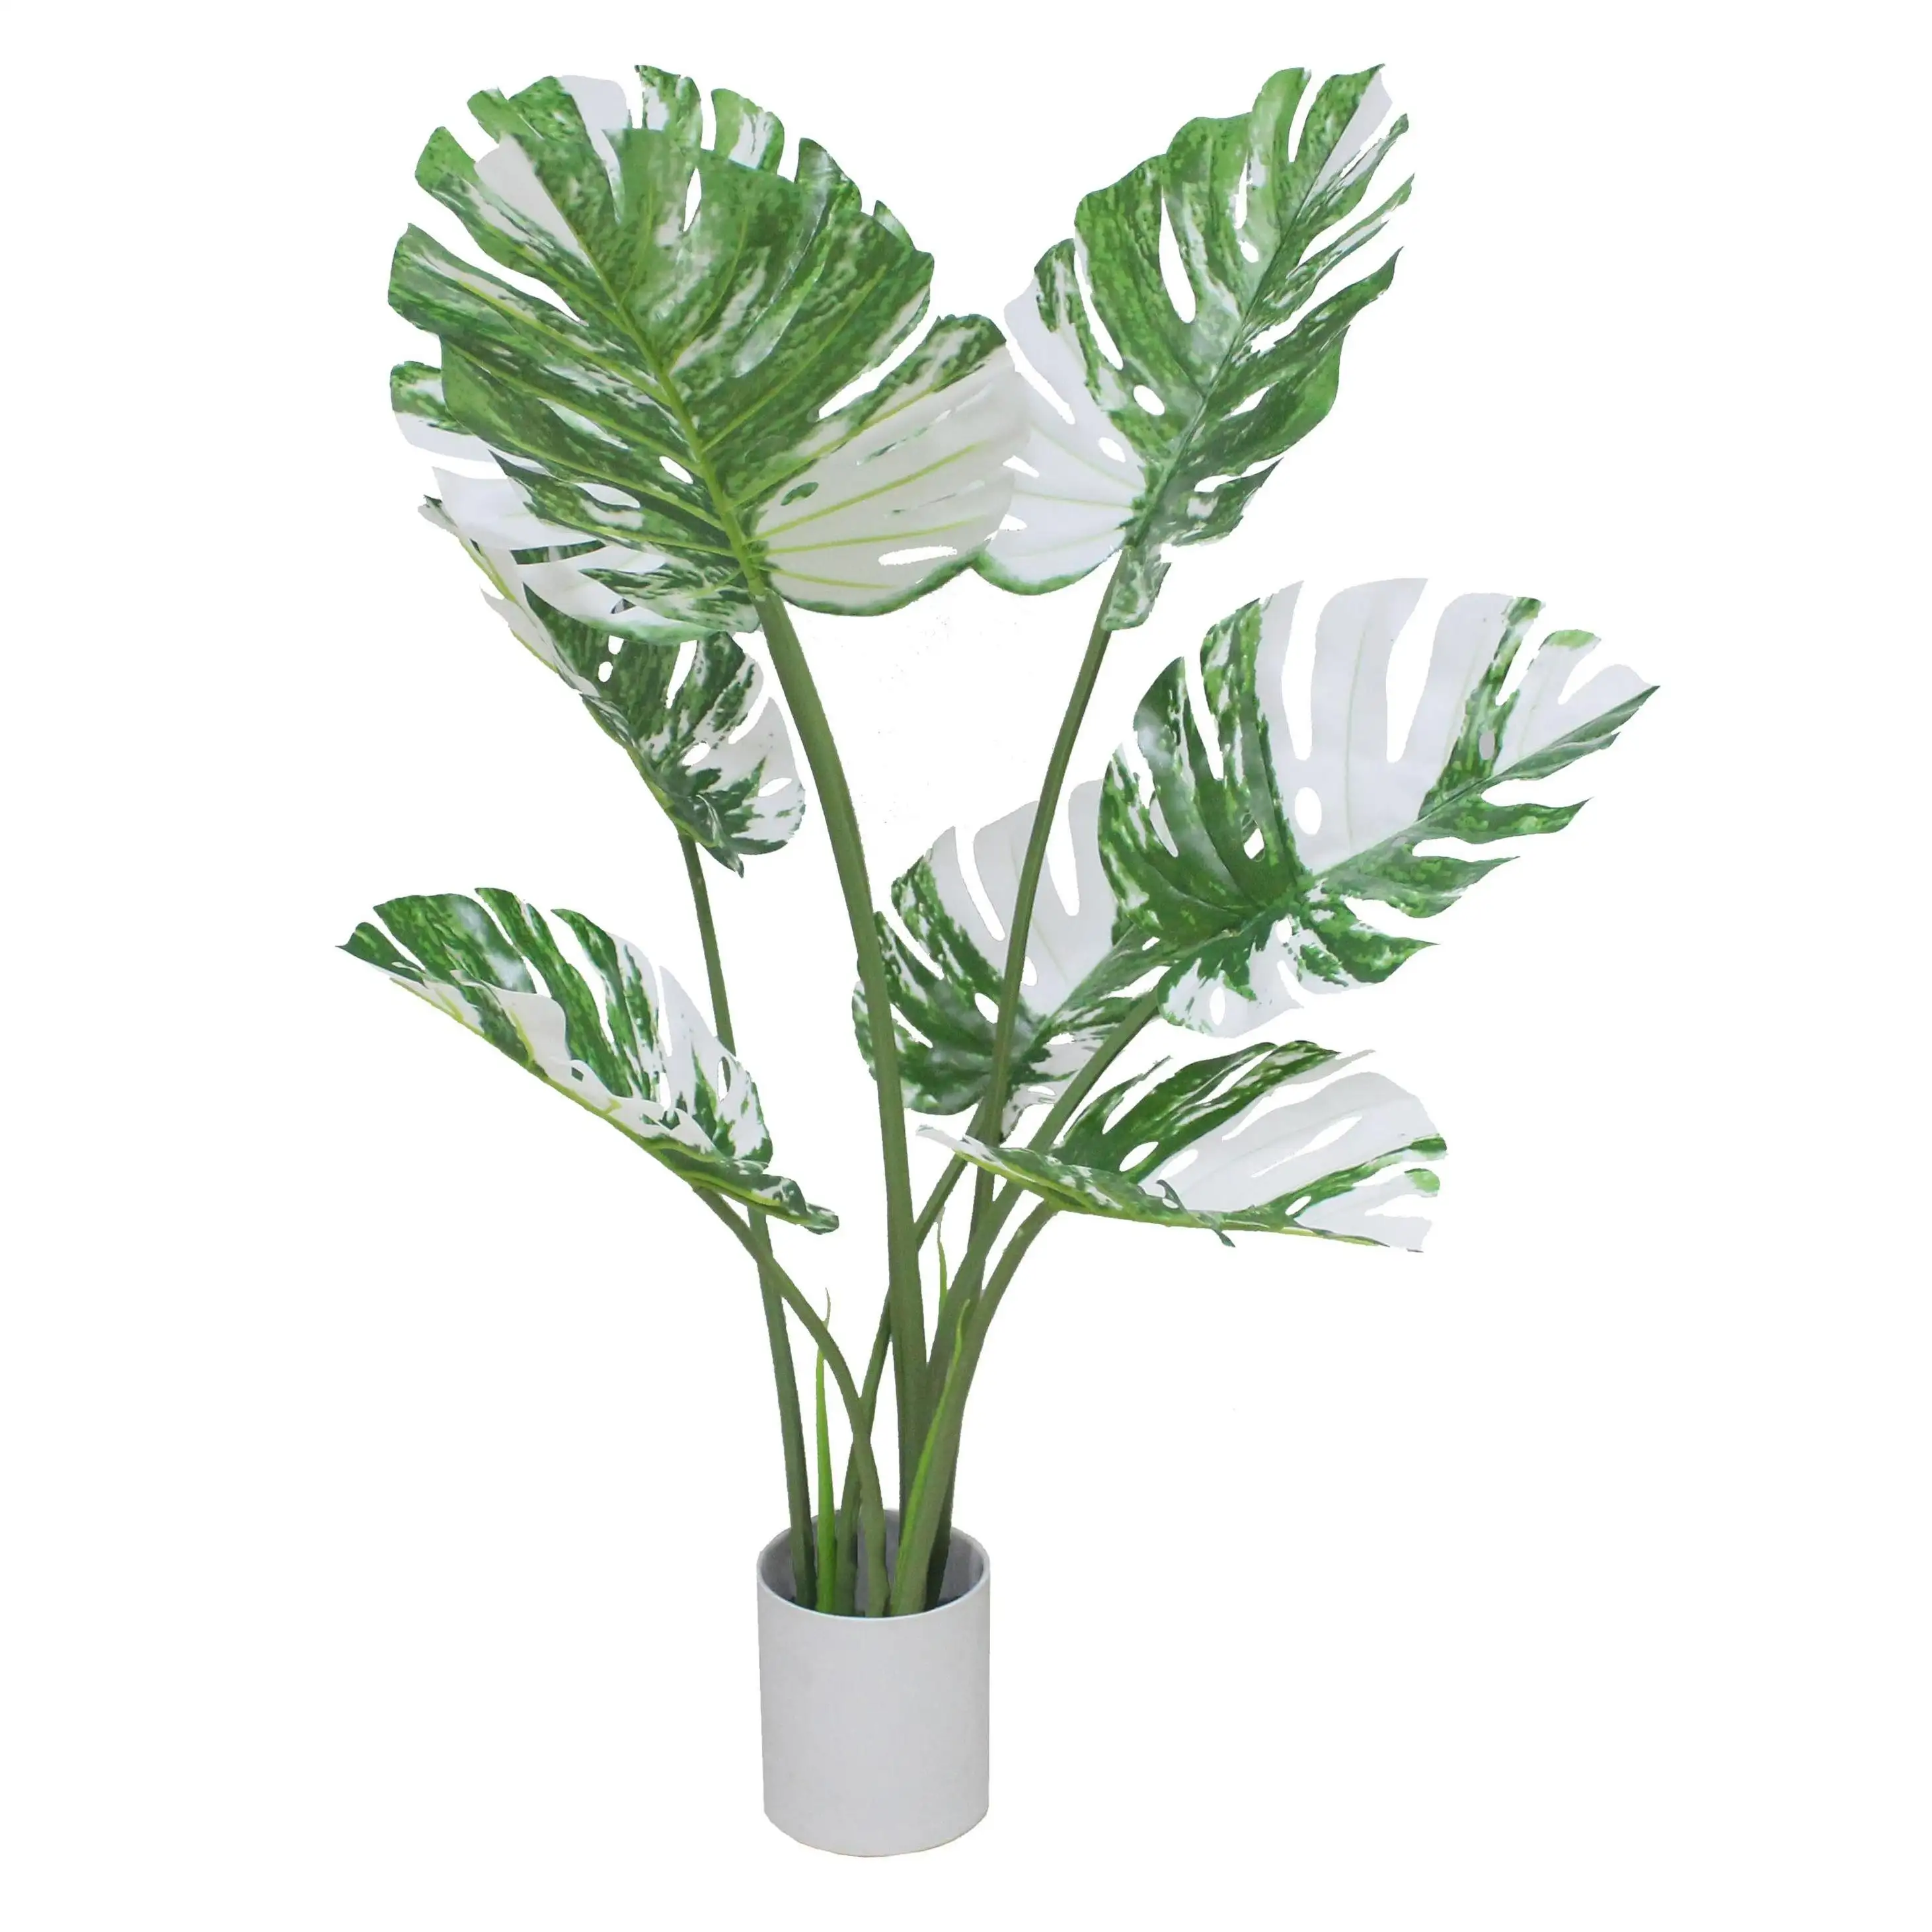 Vaso artificial para plantas, vaso grande de flores de bananeira, palmeira artificial artificial para uso ao ar livre, novo em forma de vaso artificial, ideal para plantas e orquídeas